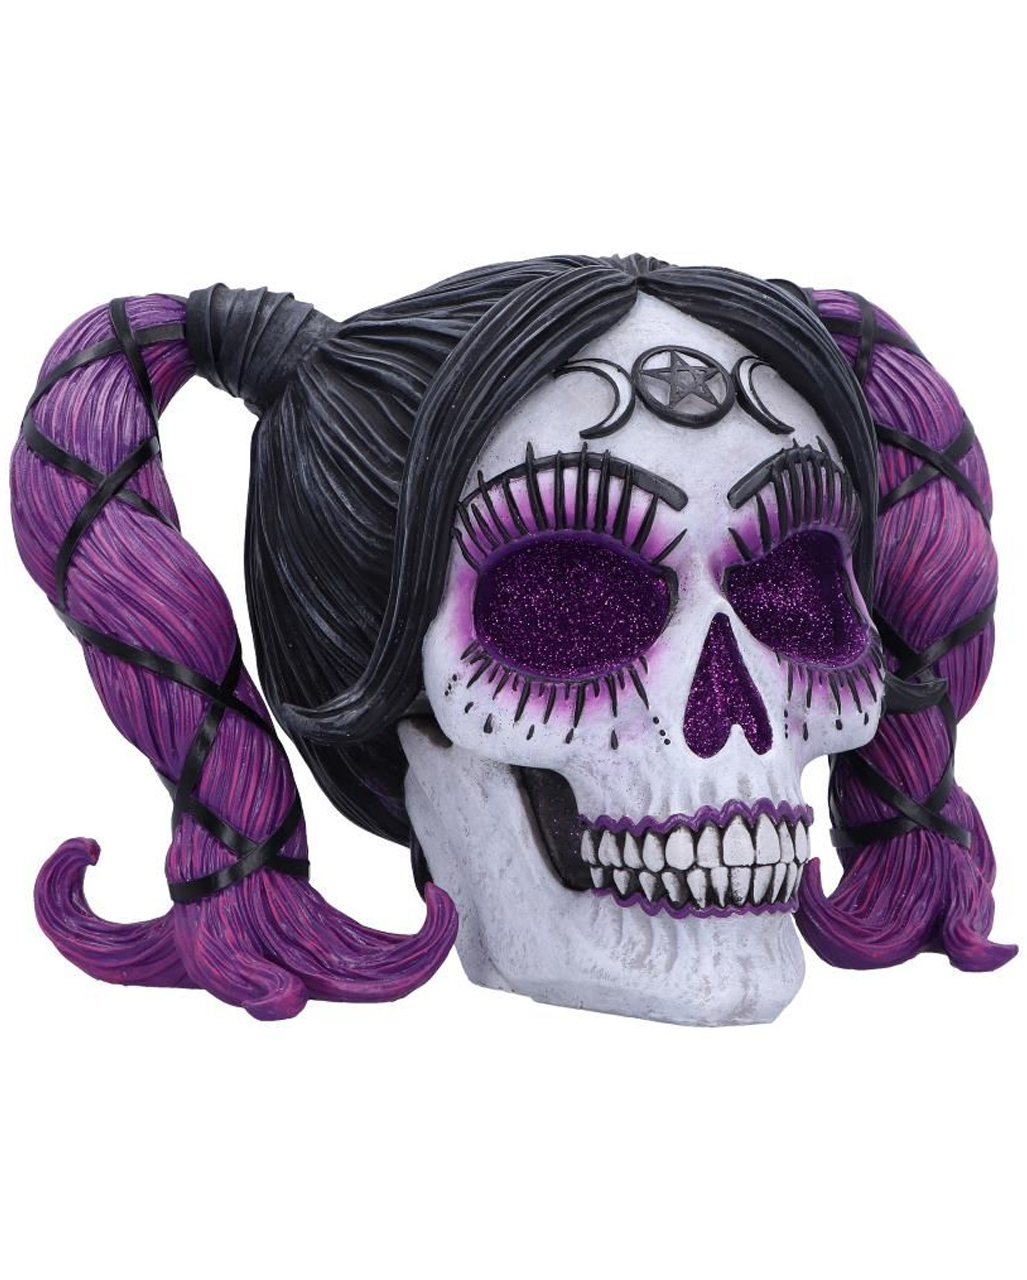 Drop Dead Gorgeous - Myths & Magic Totenkopf 20,5cm  Voodoo Doll von Horror-Shop.com